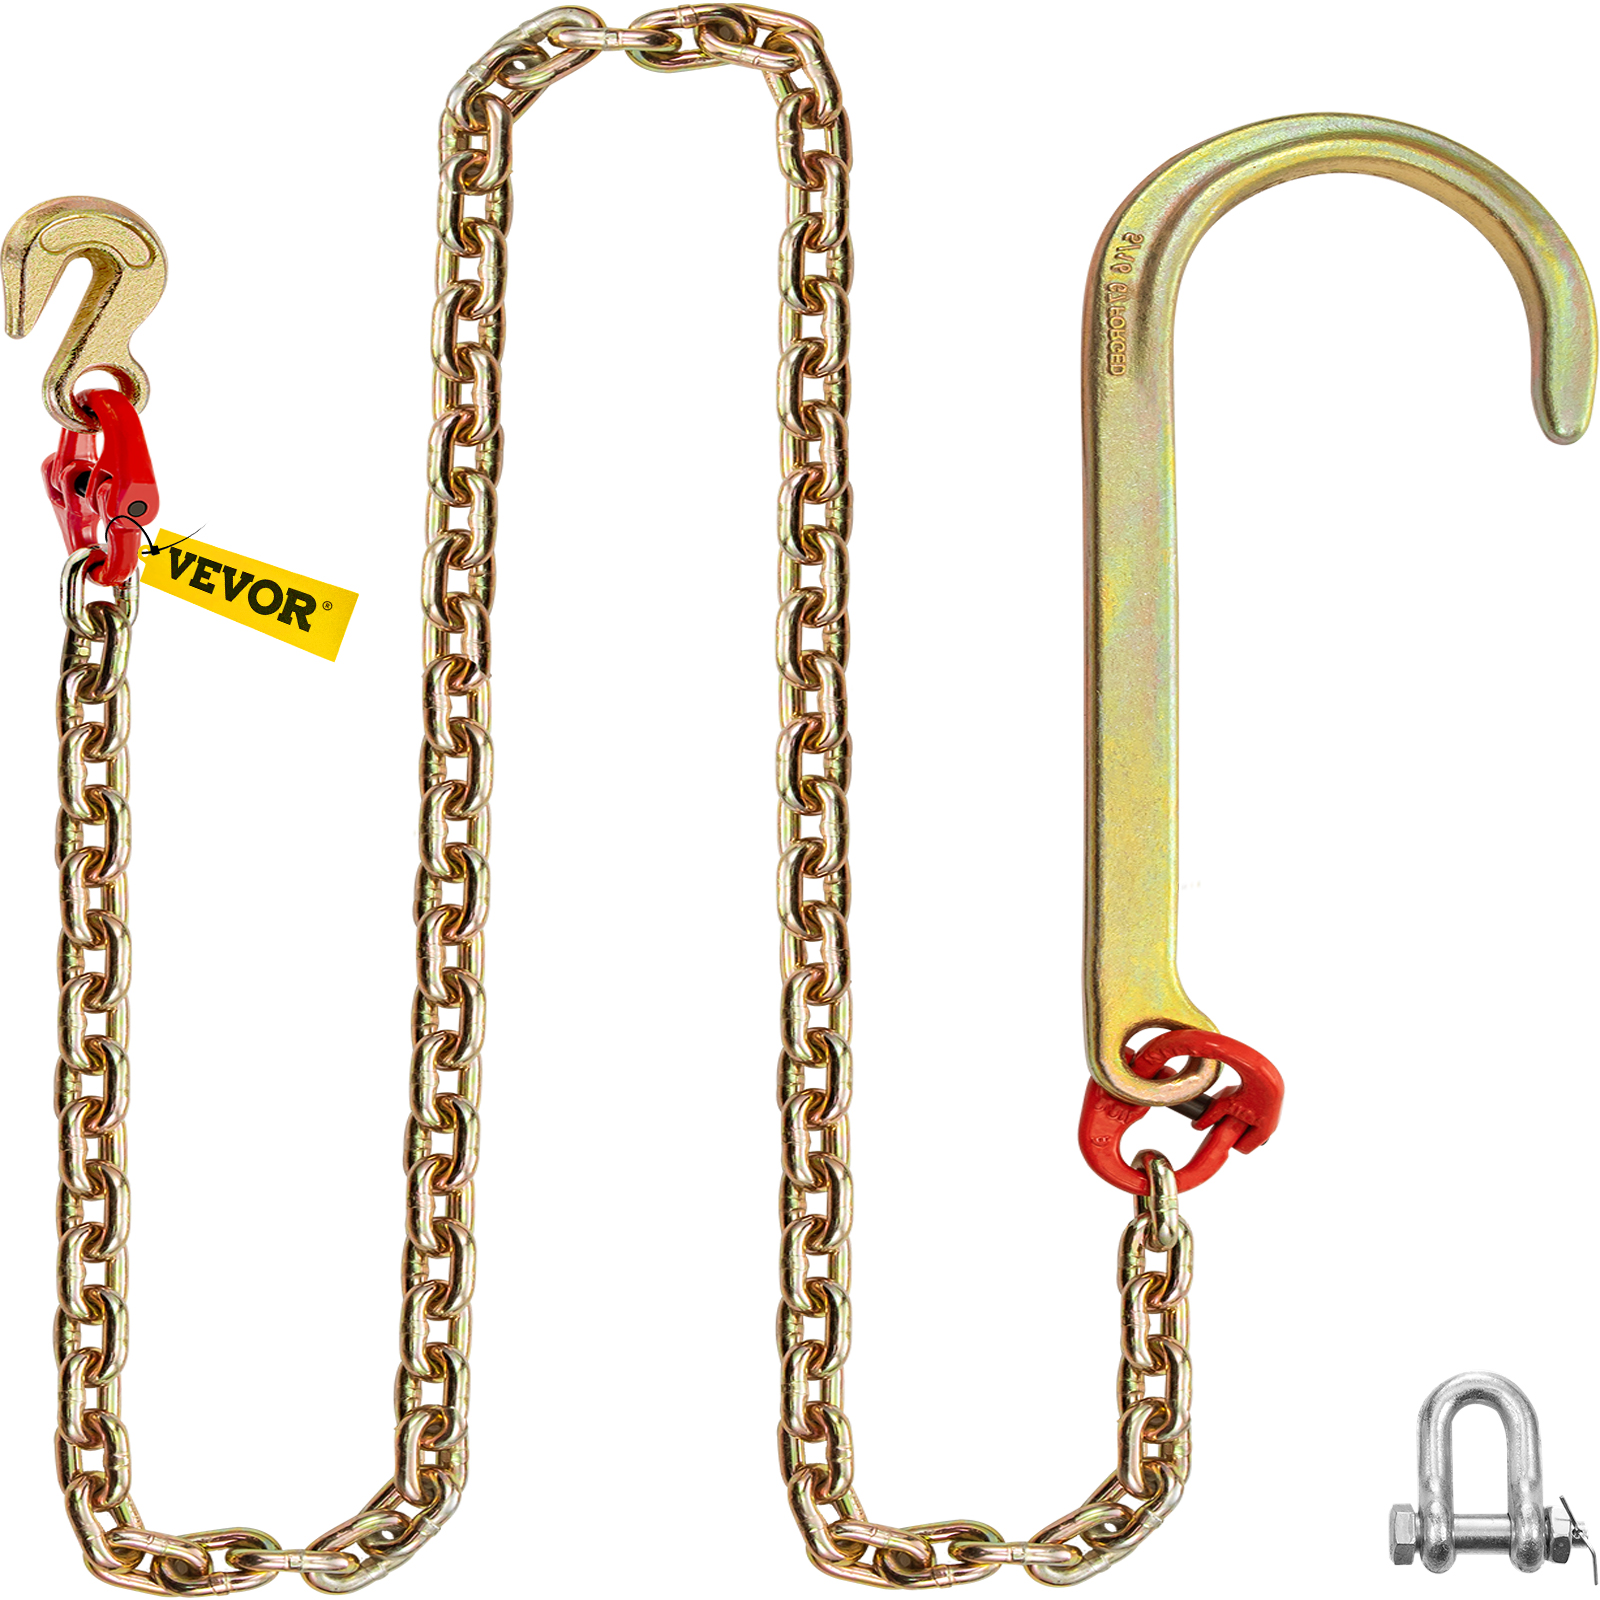 Vevor G80 V-chain Bridle Large J Hook &amp Grab Hook, 6' Leg Tow Chain 9260 Wll от Vevor Many GEOs